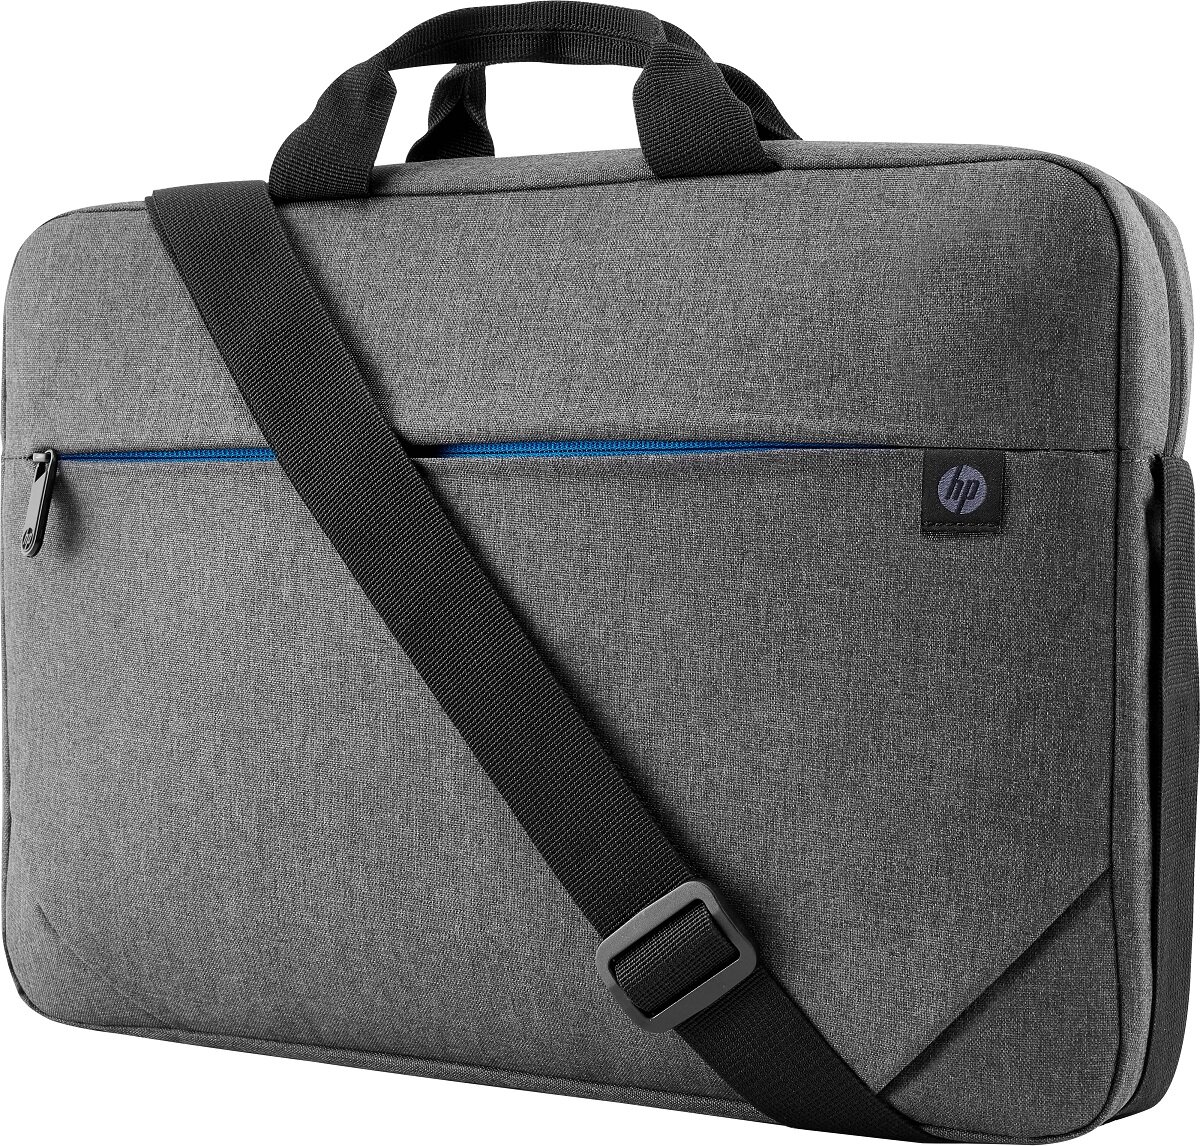 Torba na laptopa HP Prelude 15.6 widok torby od przodu pod skosem